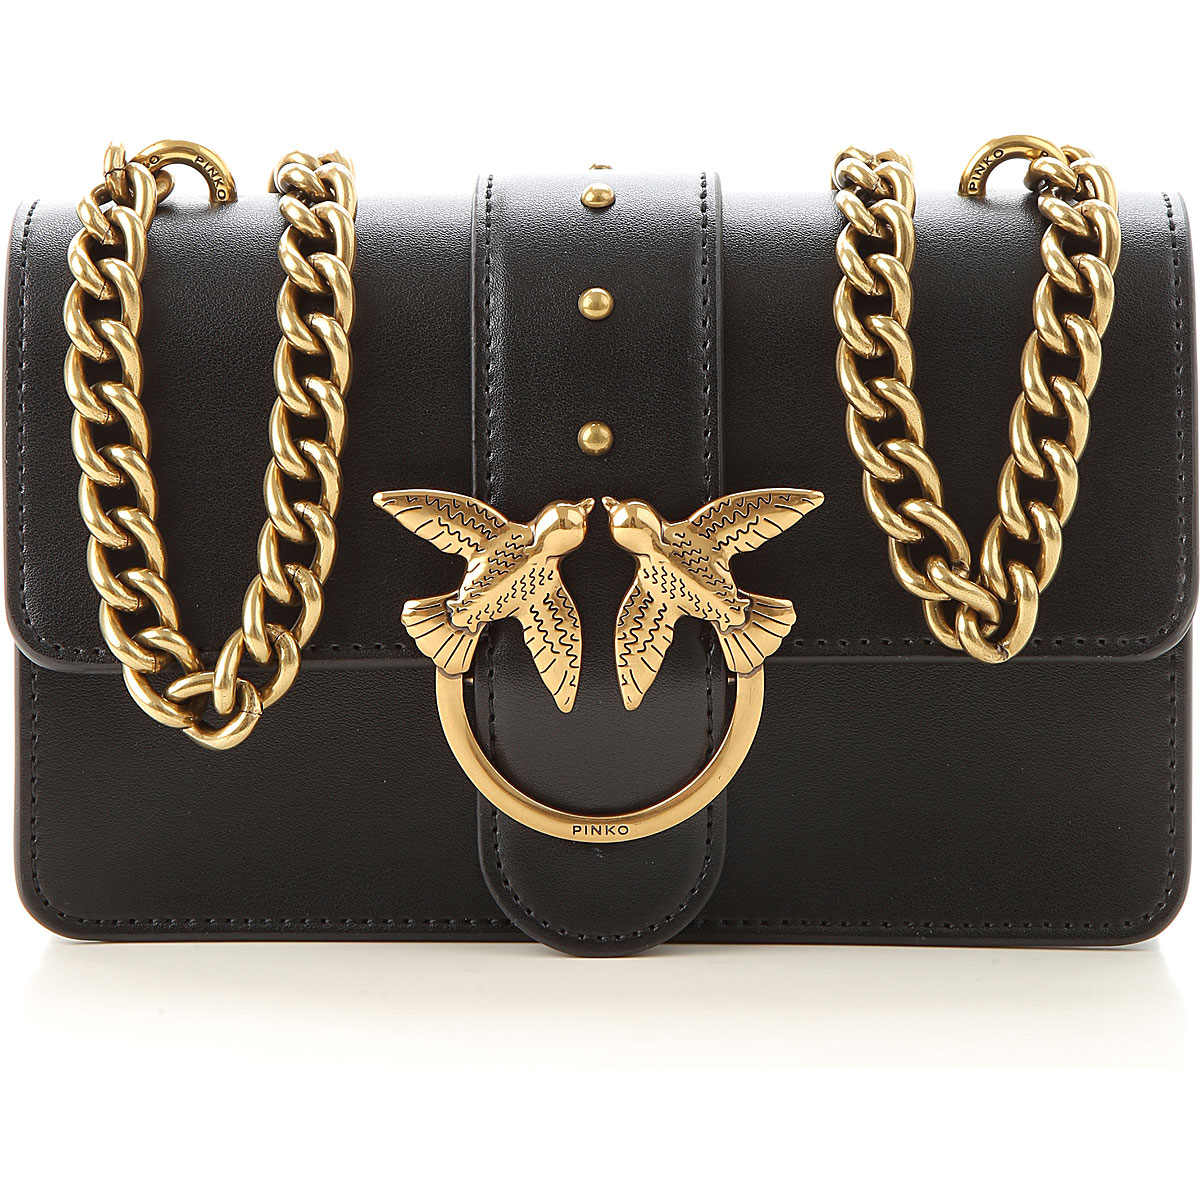 Handbags Pinko, Style code: 1p21tfy6jc-z99-lovemini